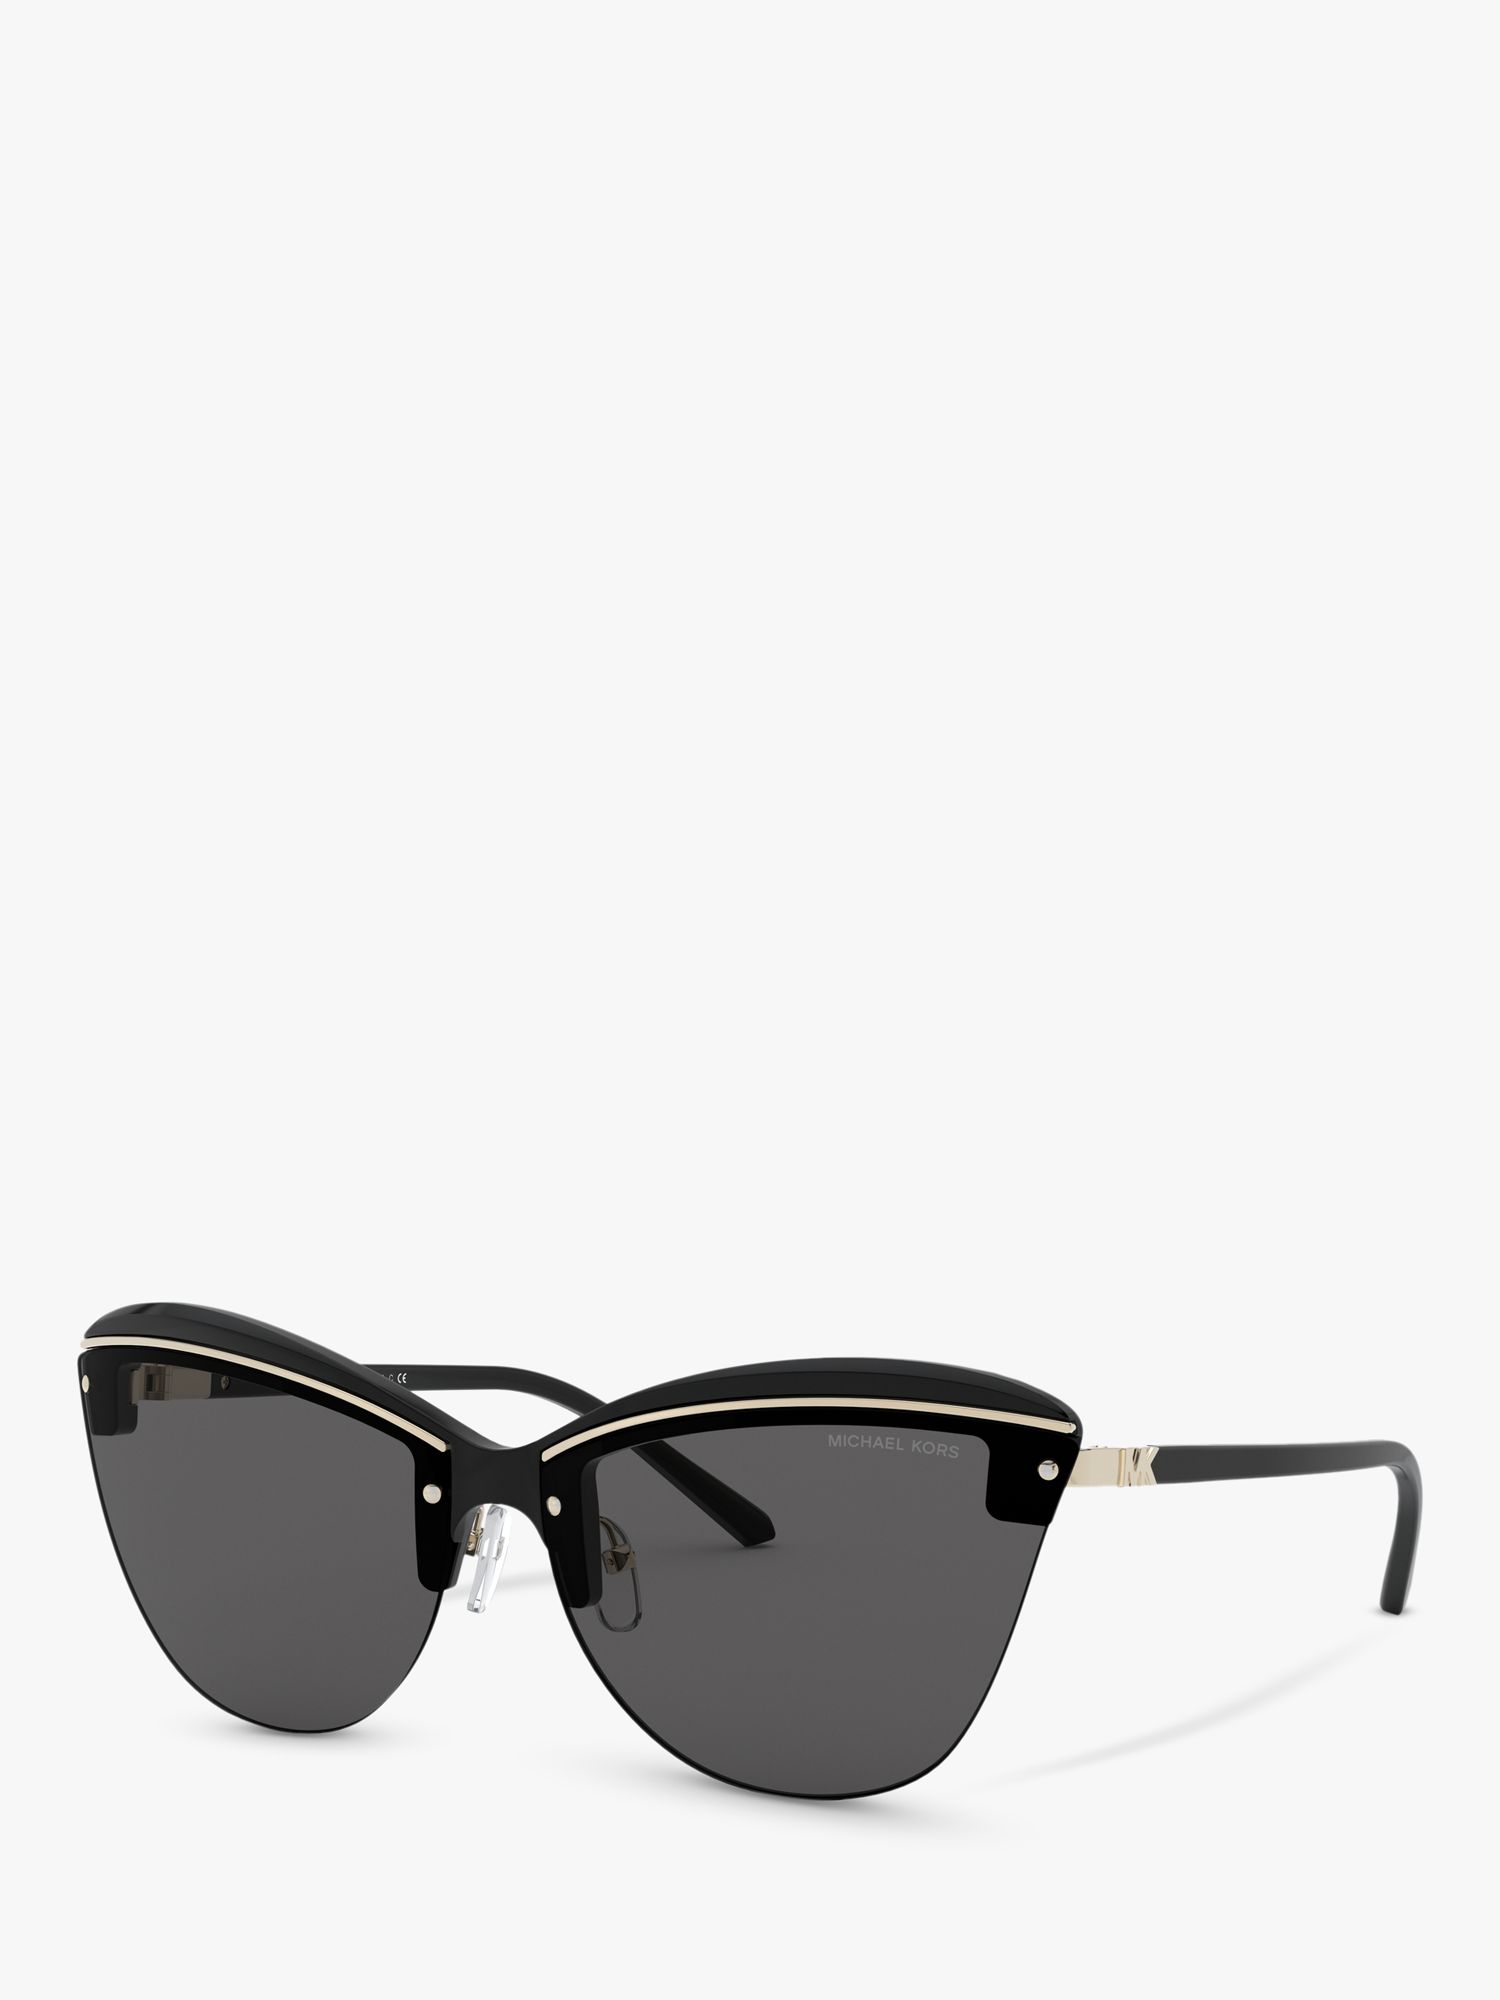 Michael Kors Mk2113 Cat S Eye Sunglasses Black